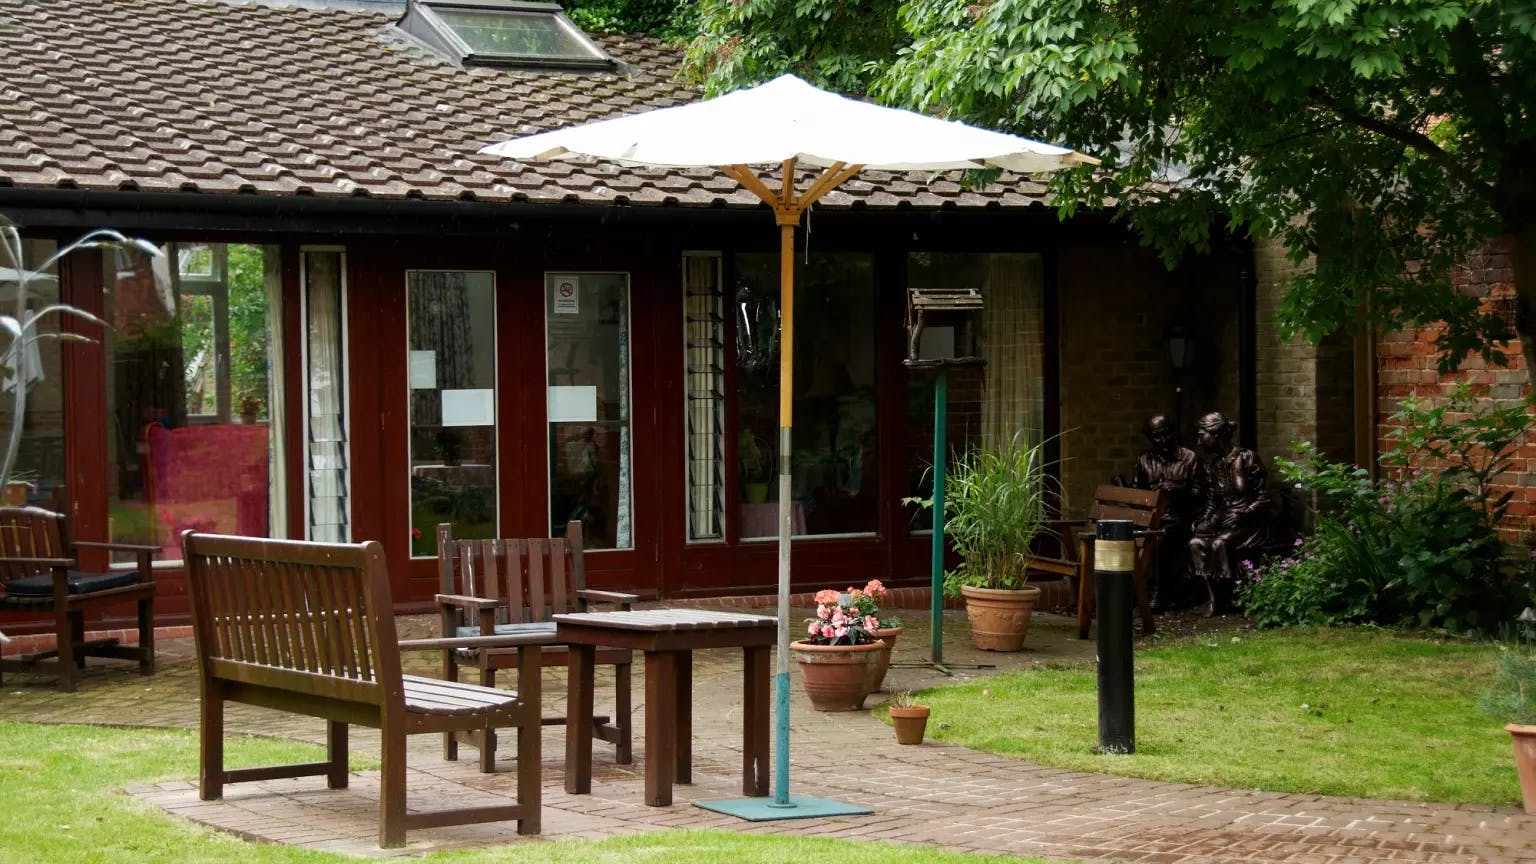 Garden Richard Cox House care home in Royston, Hertfordshire